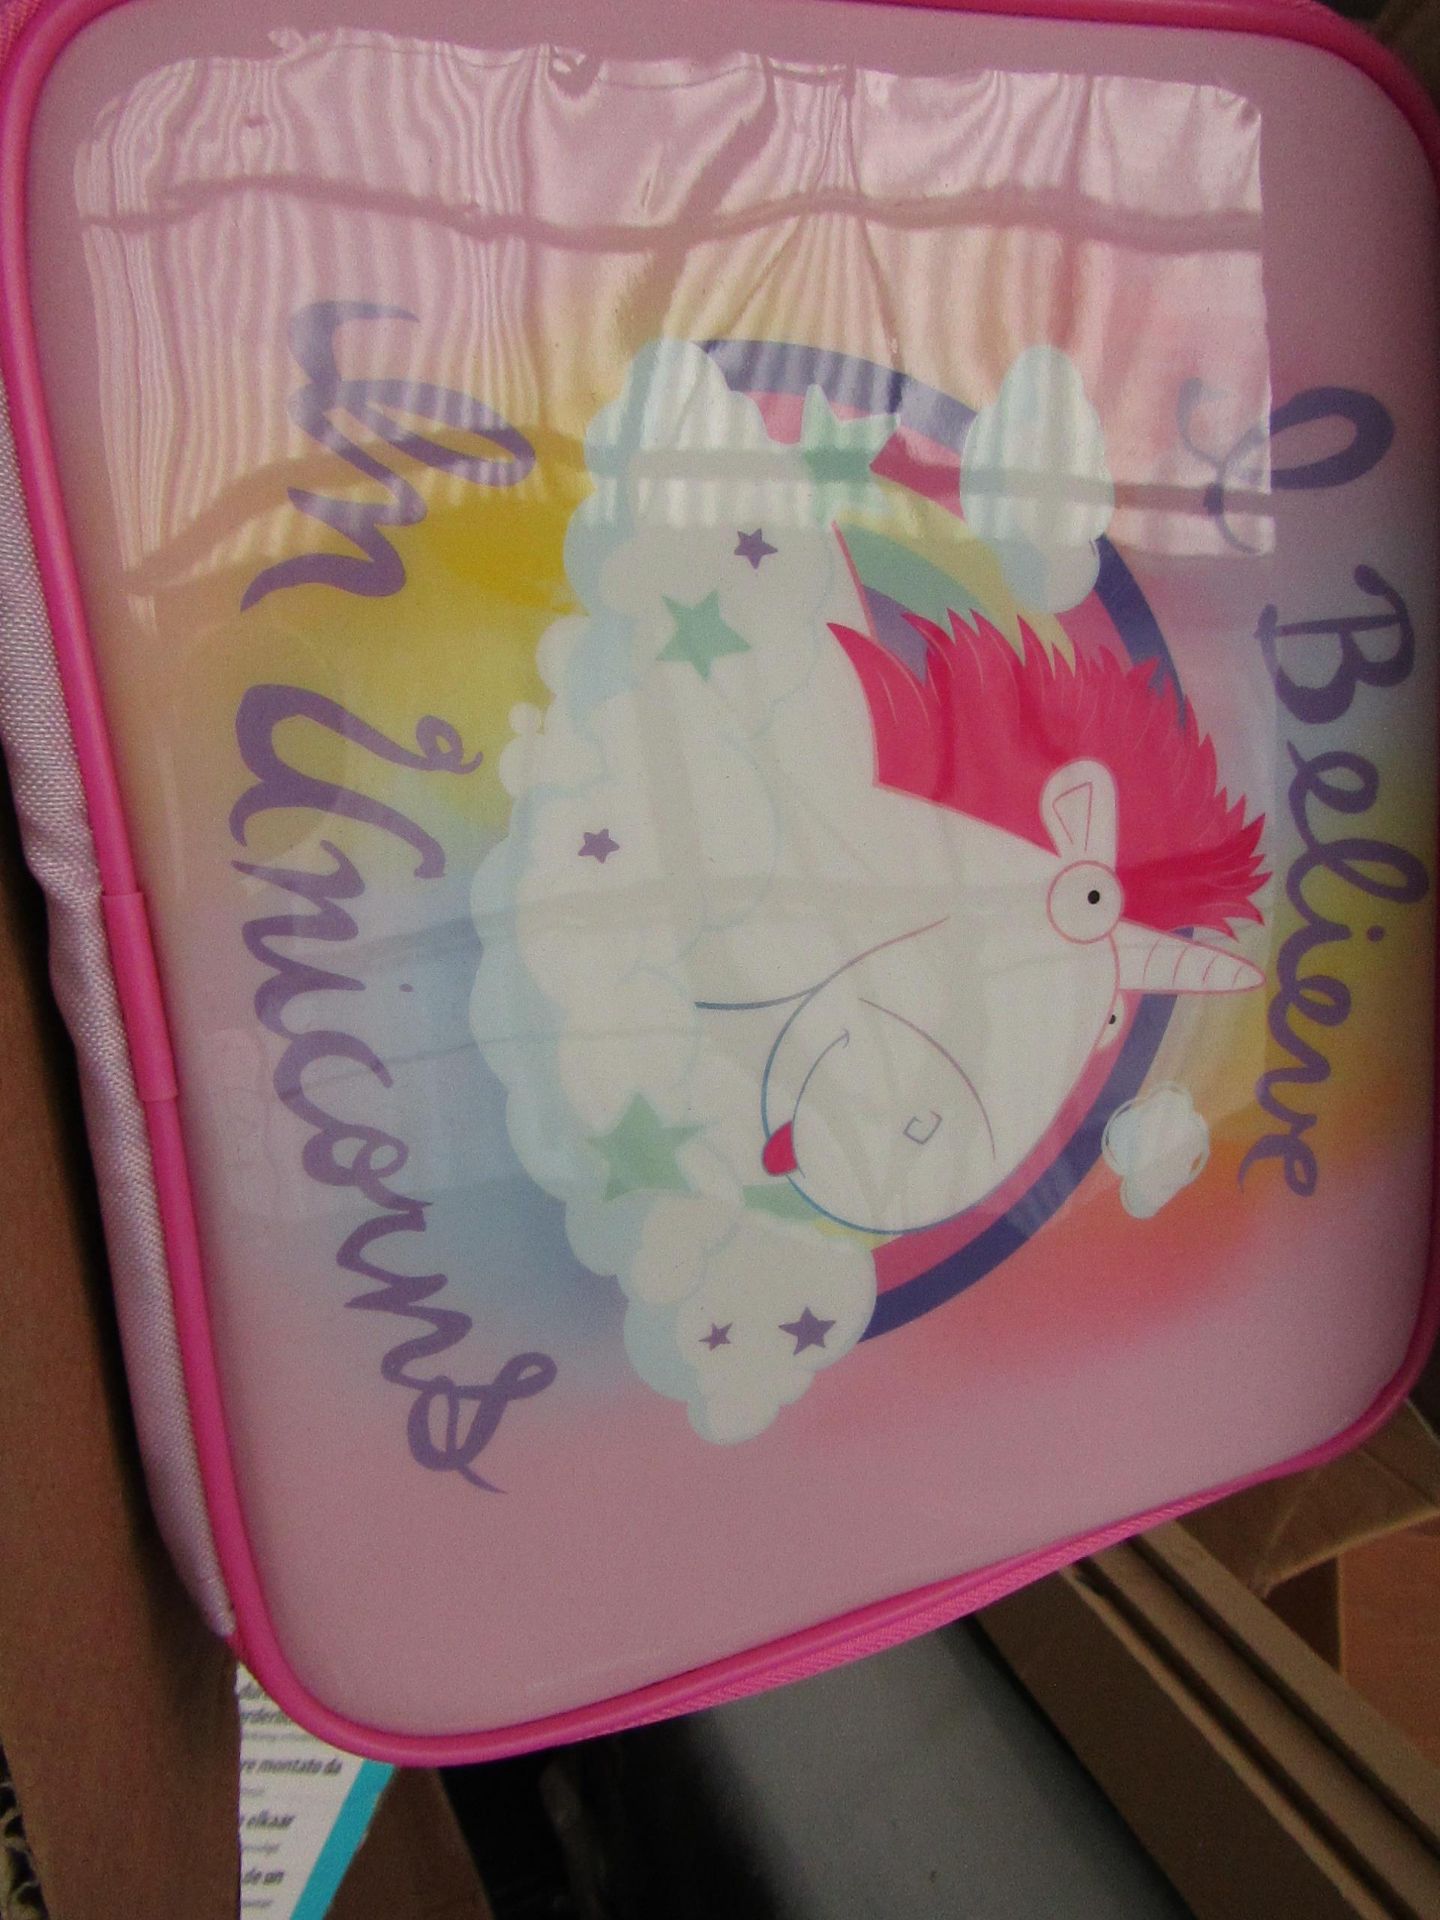 I love Unicorns - Lunch Bag - Box of 3 Units - New & Boxed.